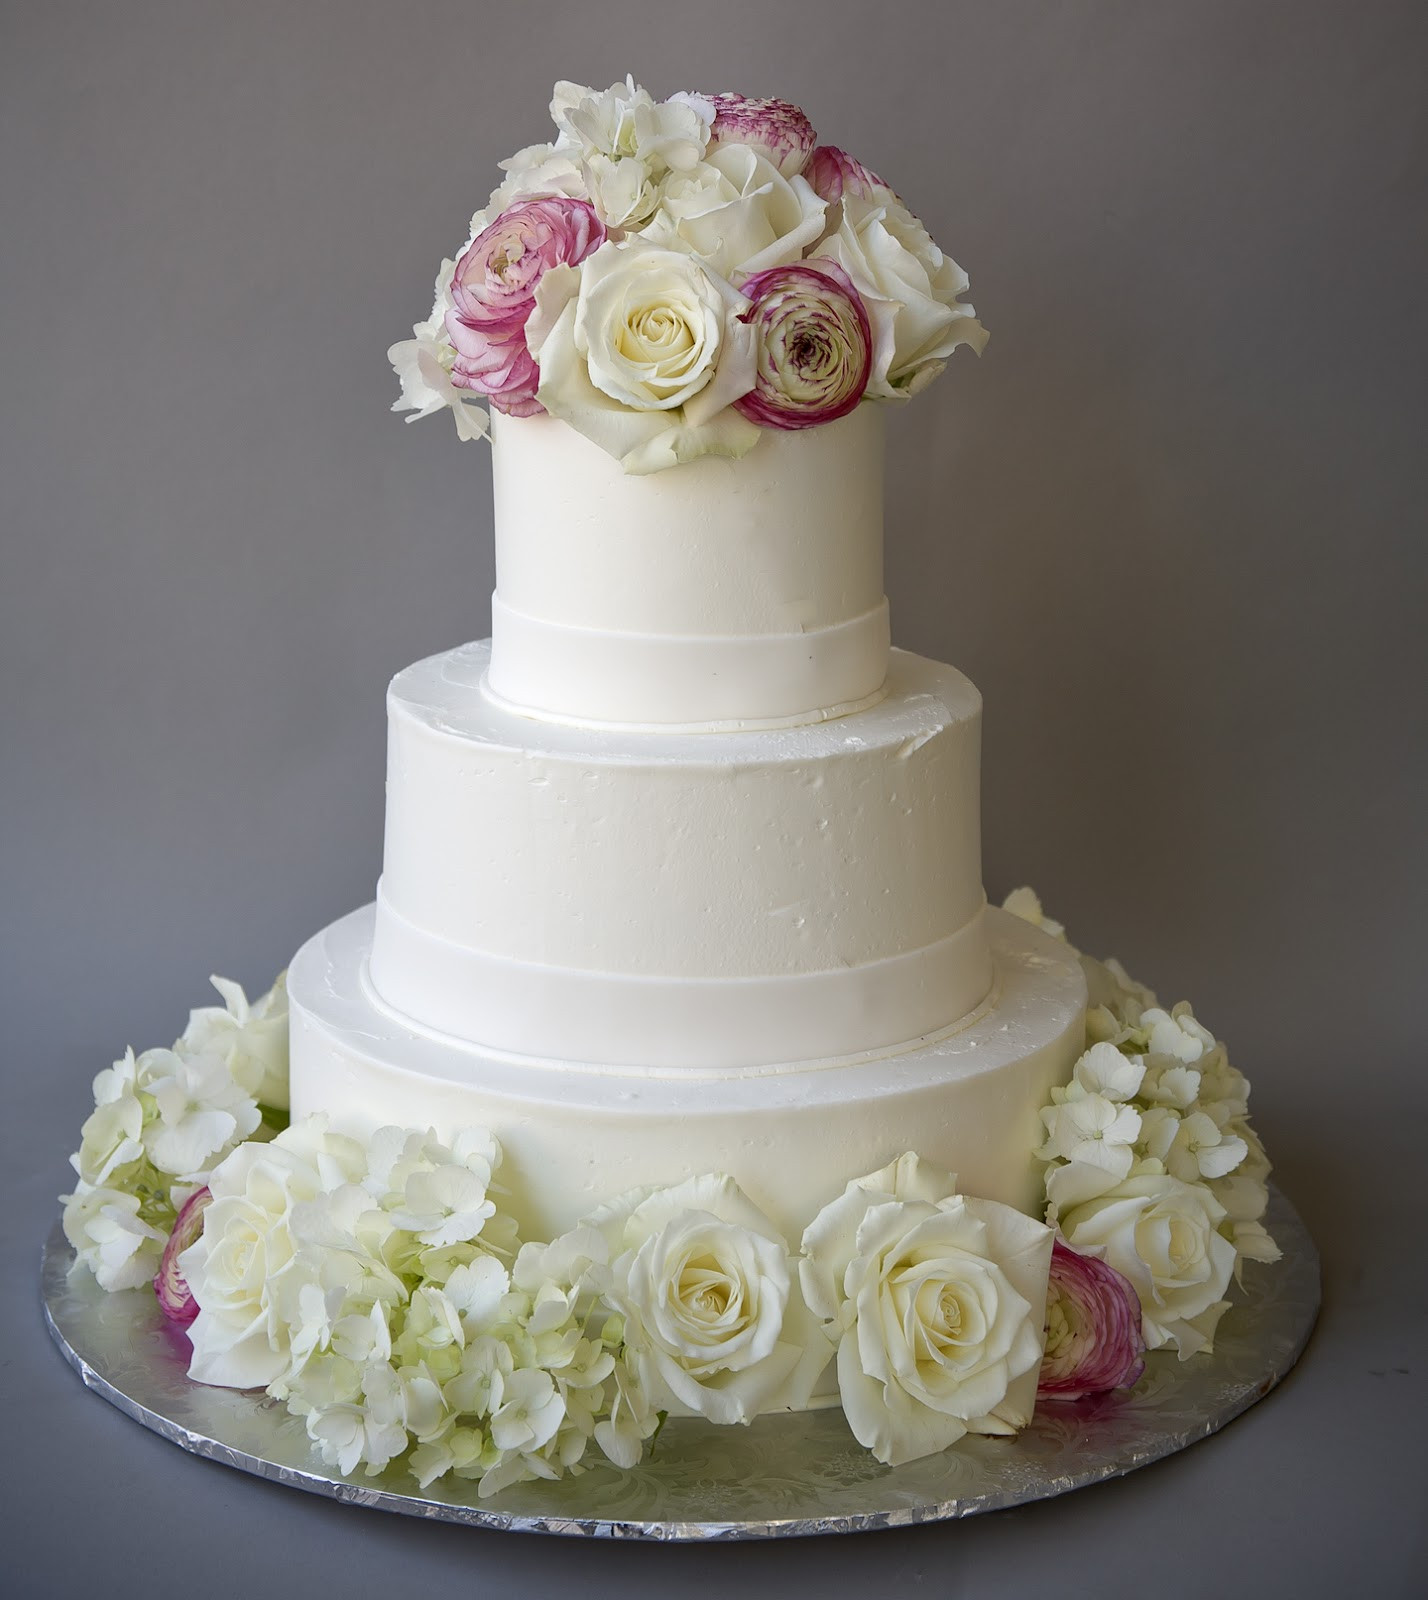 Fresh Flowers On Wedding Cake
 A Simple Cake Fresh Flowers for Wedding Cakes